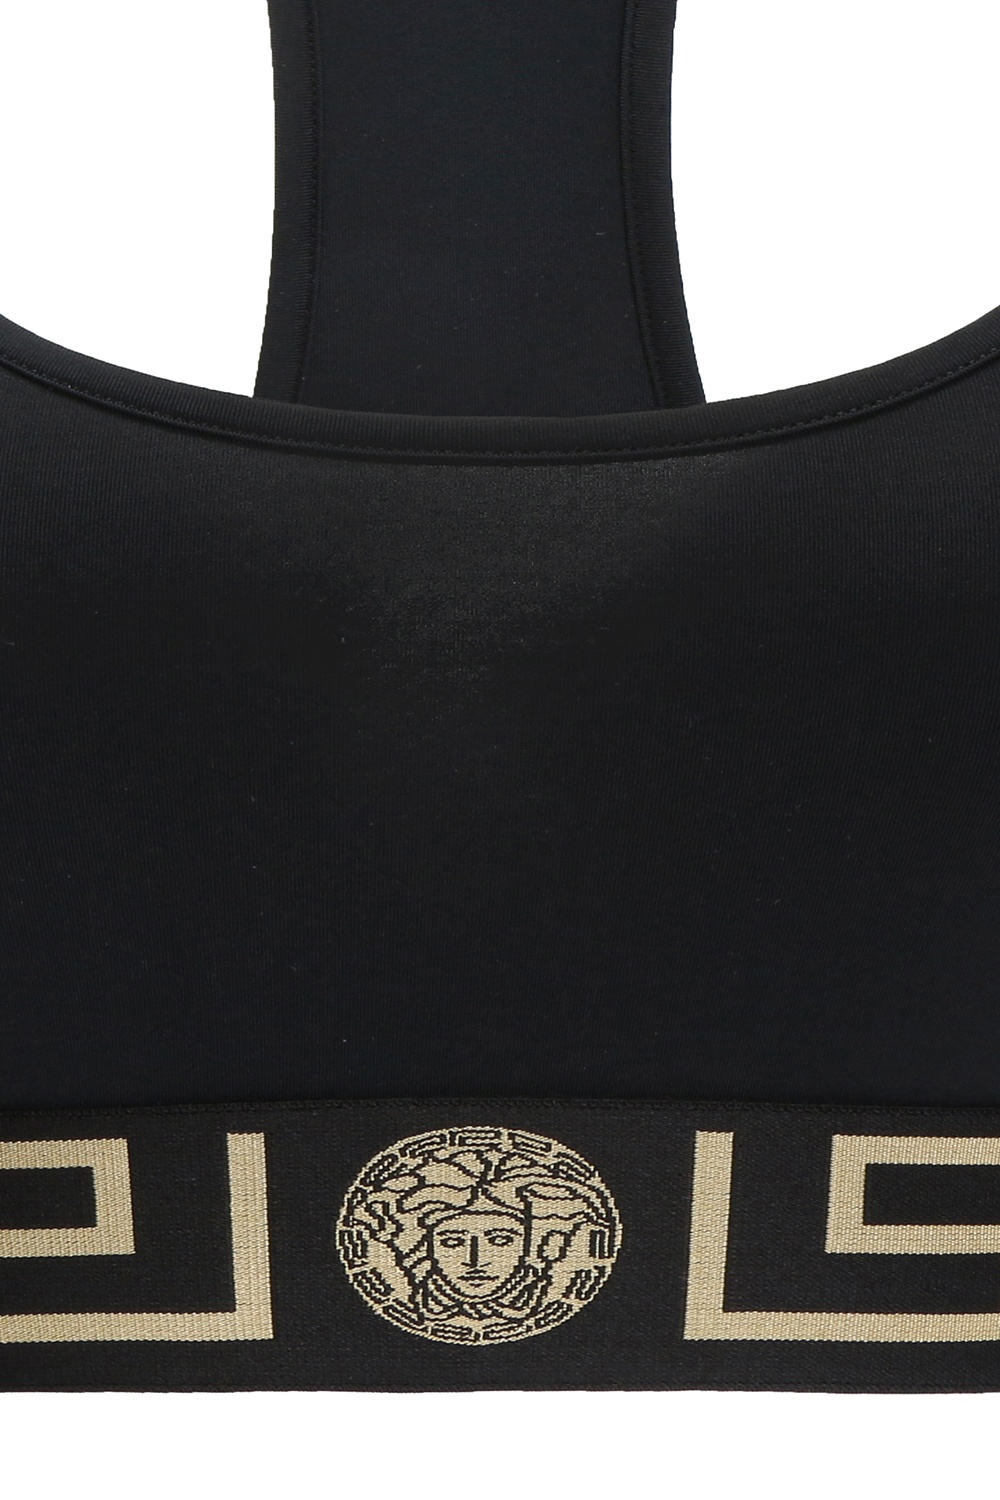 VERSACE Sports bra in black/ gold